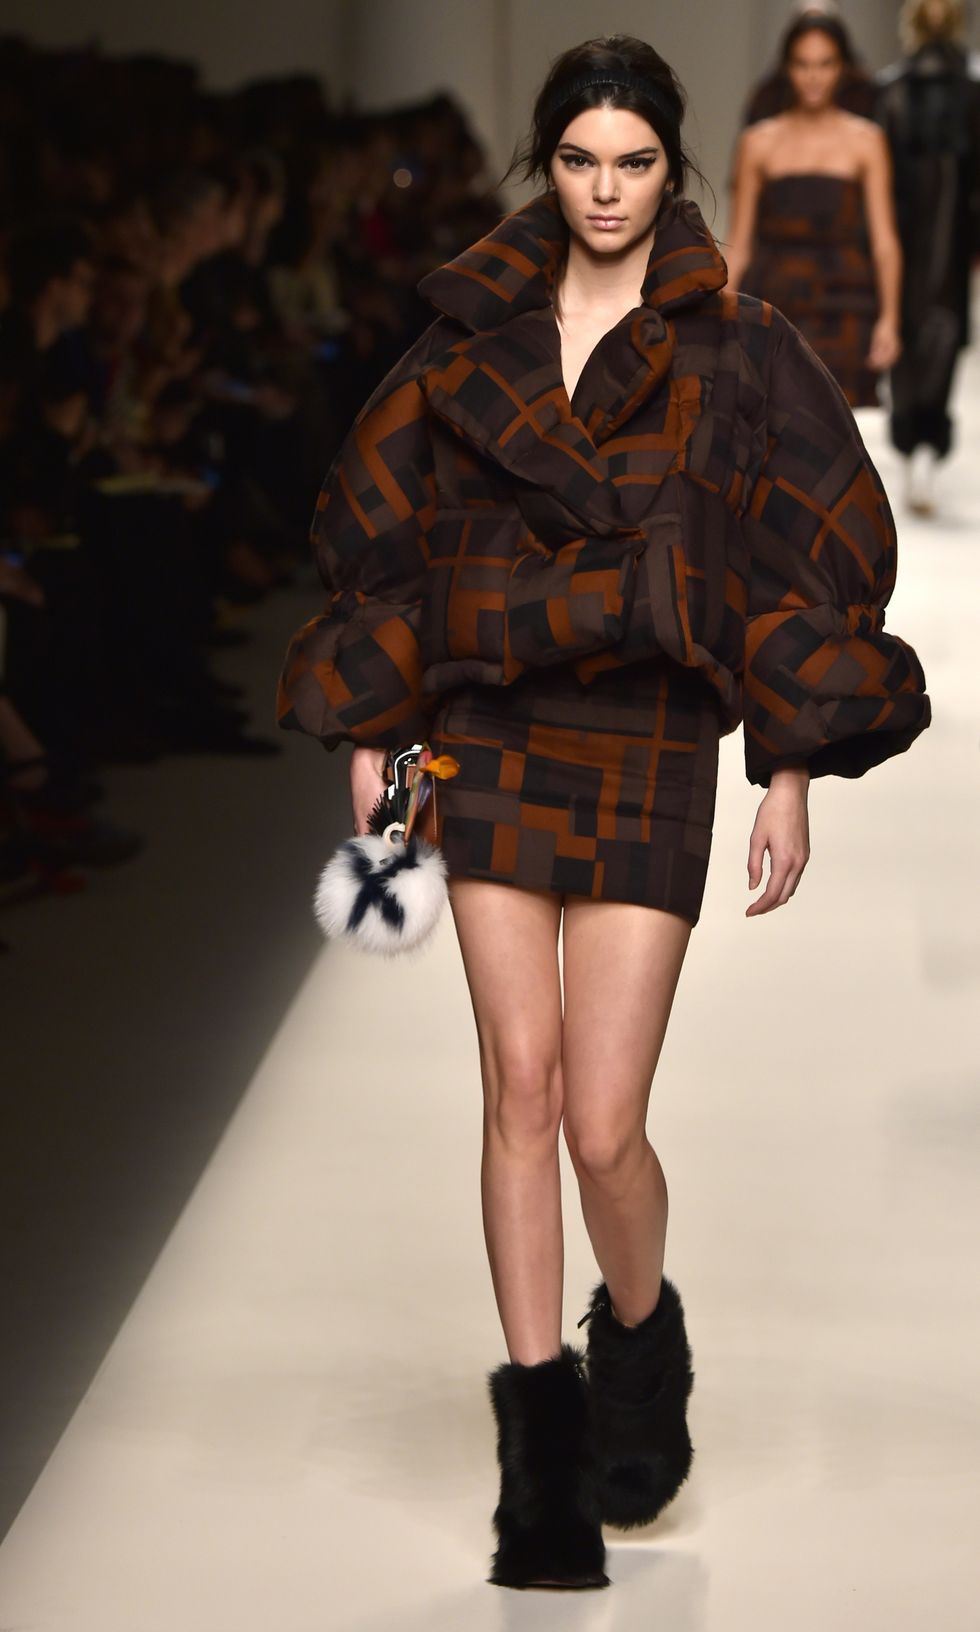 Kendall Jenner takes to the catwalk for Fendi at Milan Fashion Week